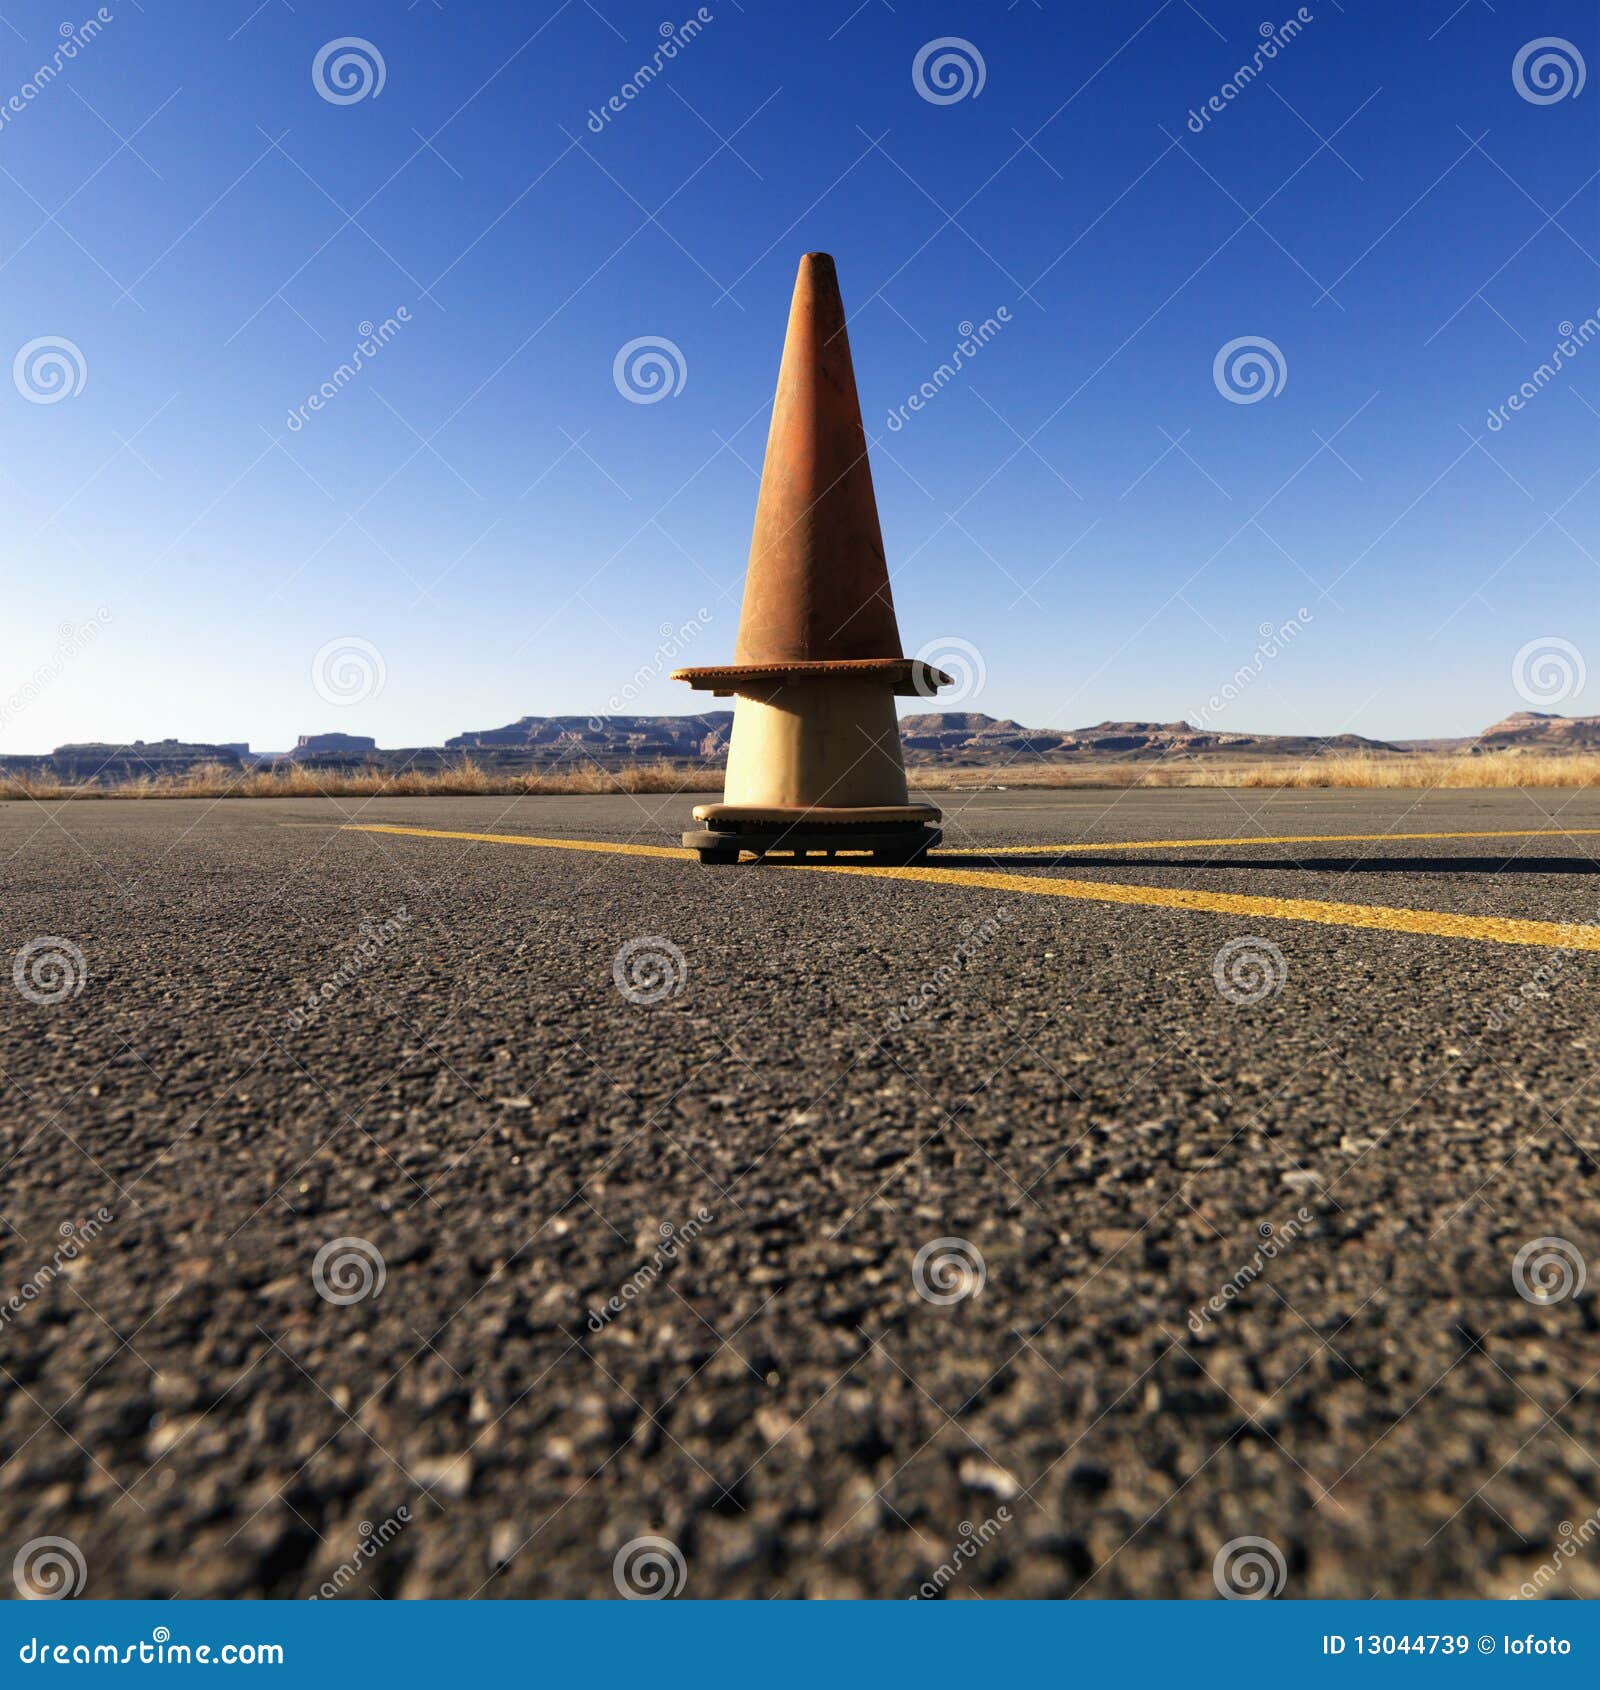 cones on airport tarmac